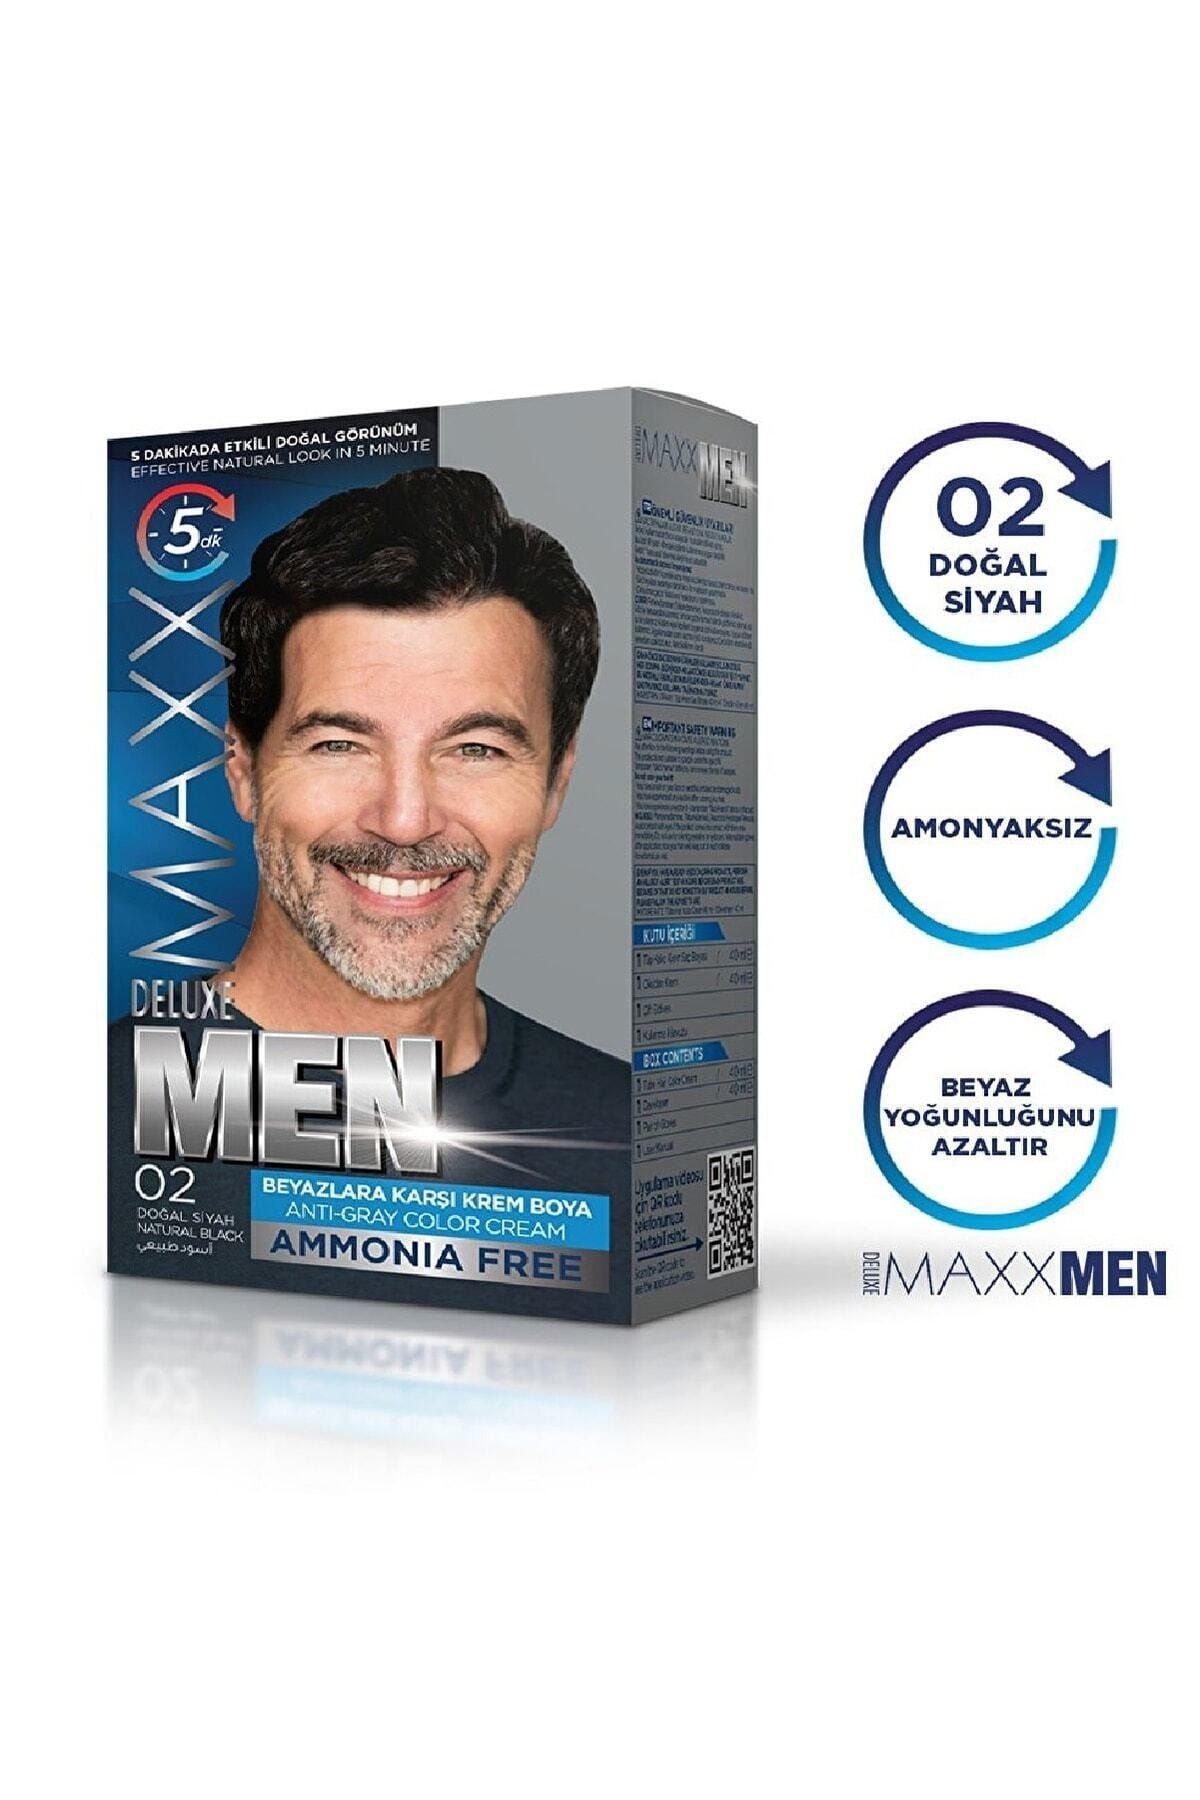 MAXX DELUXE Man 0.2 Doğal Siyah Saç Boyası